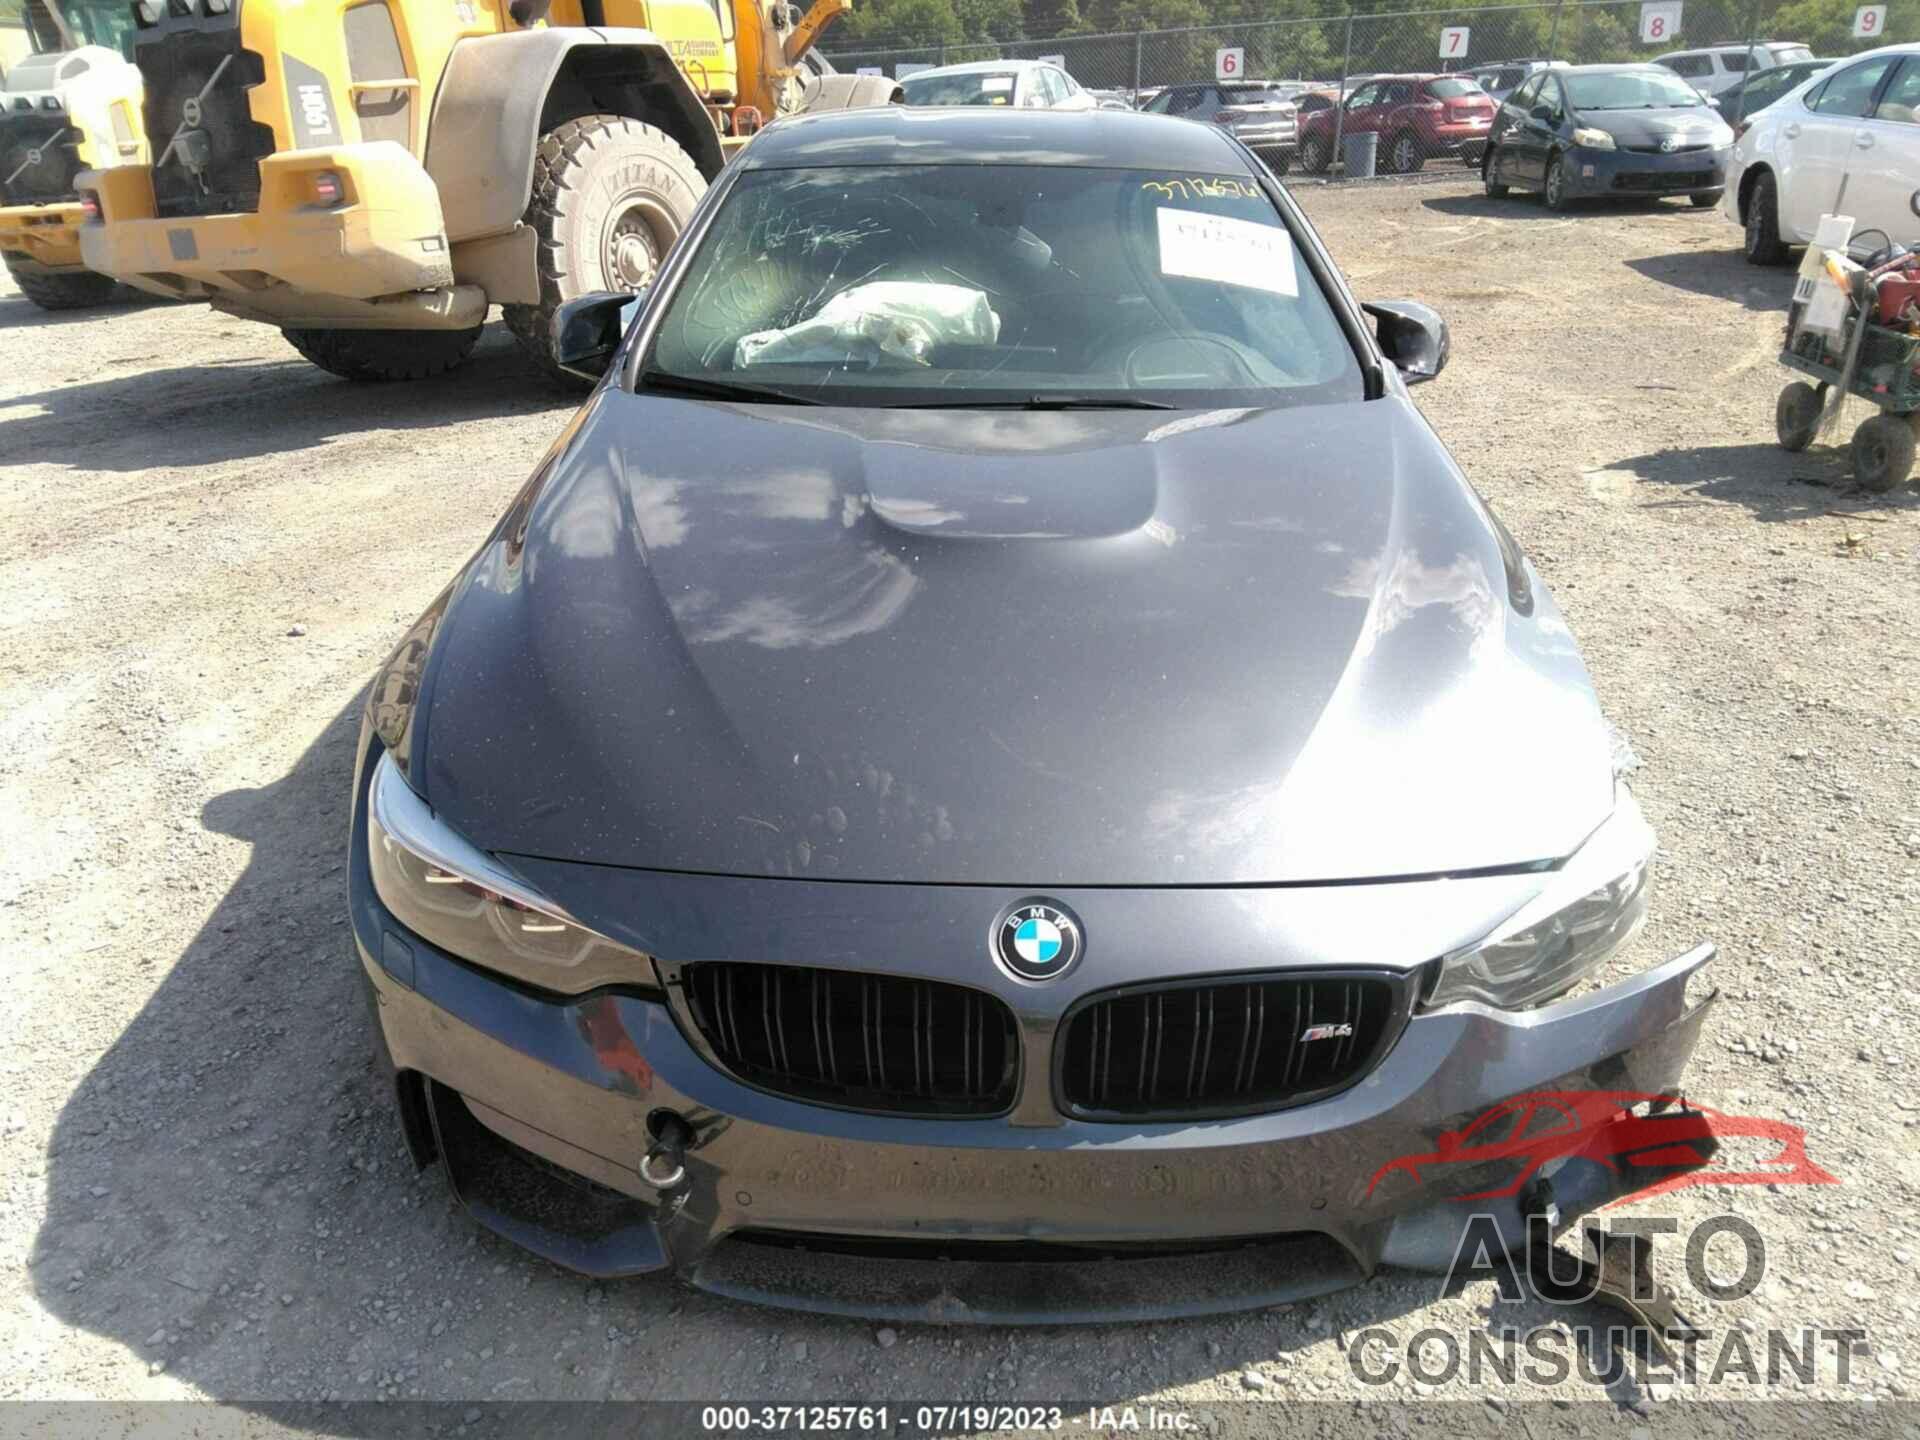 BMW M4 2017 - WBS3R9C54HK709540